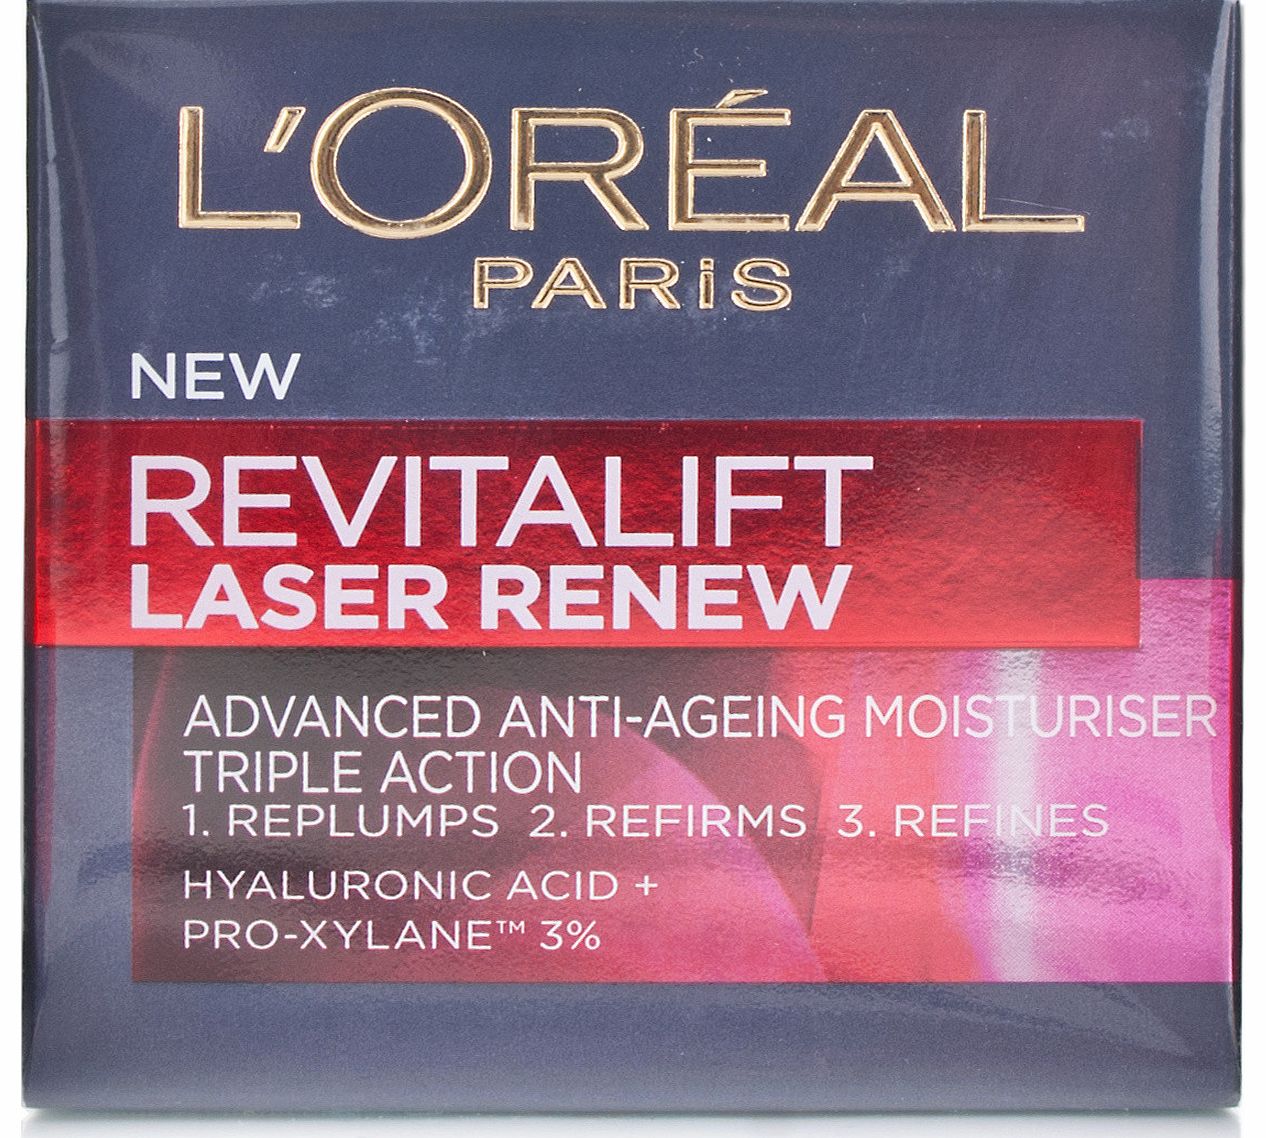 L'Oreal Revitalift Laser Renew Day Cream